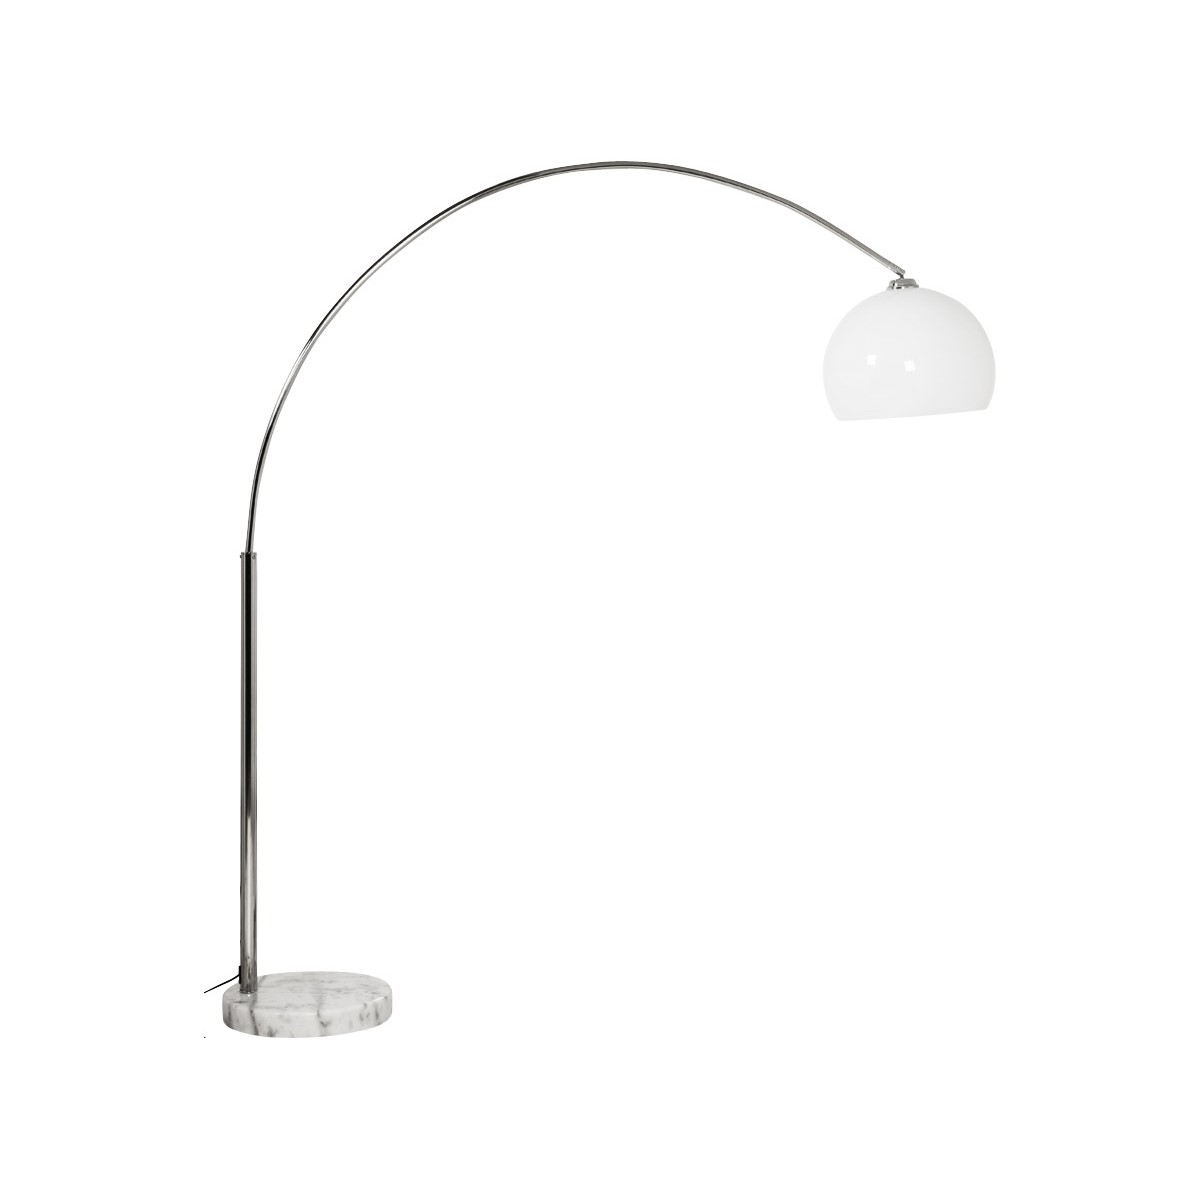 Lampe sur pied moderne design